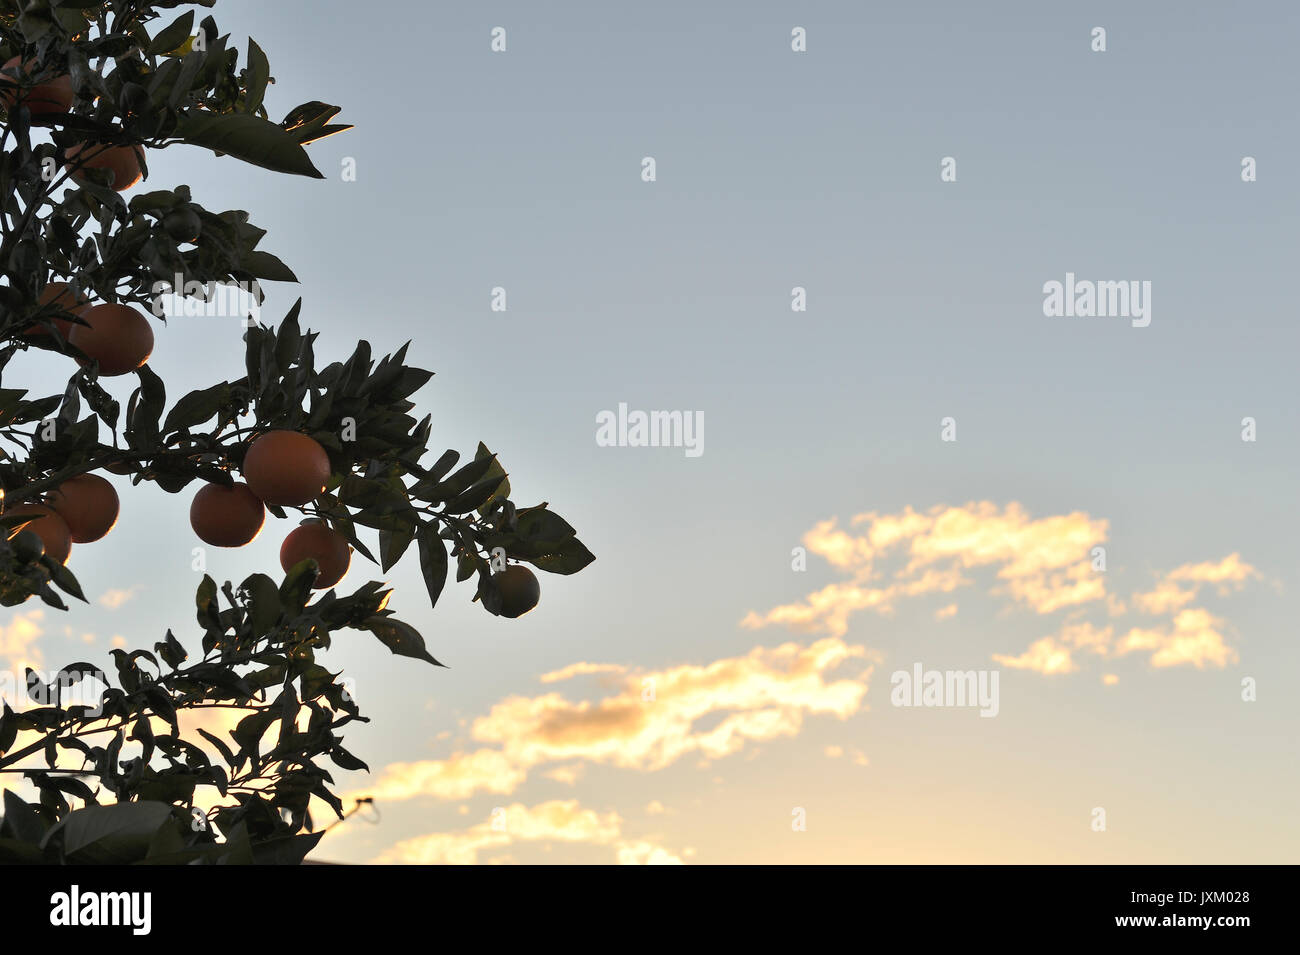 Valencia orange (Citrus sinensis) wächst am Baum im Winter. Bei Sonnenuntergang Geschossen. Potts Hill. New South Wales. Australien Stockfoto